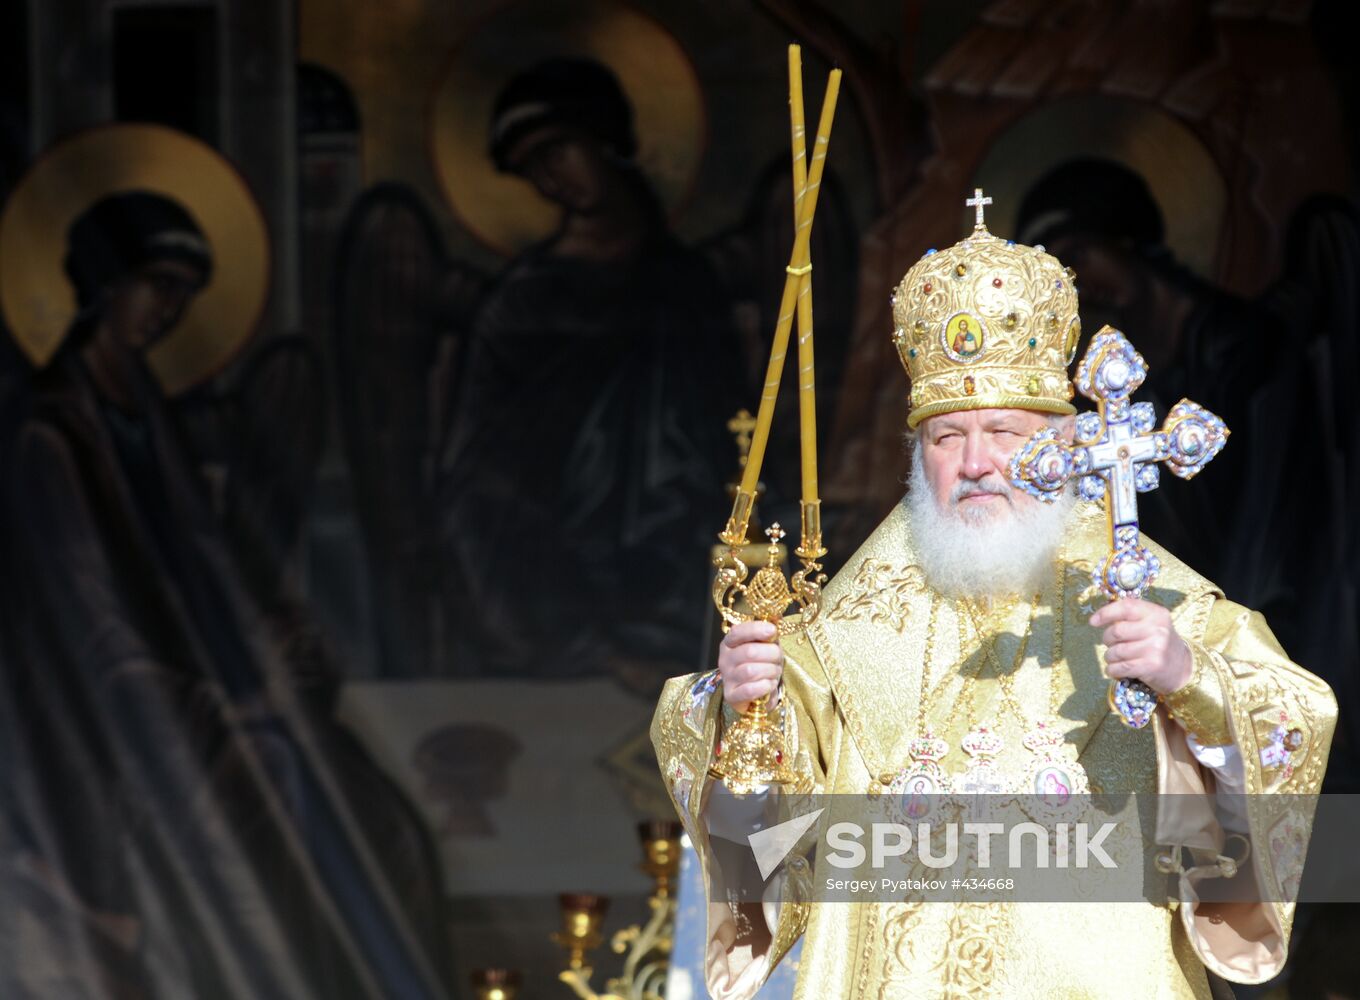 Patriarch Kirill tours Russian North